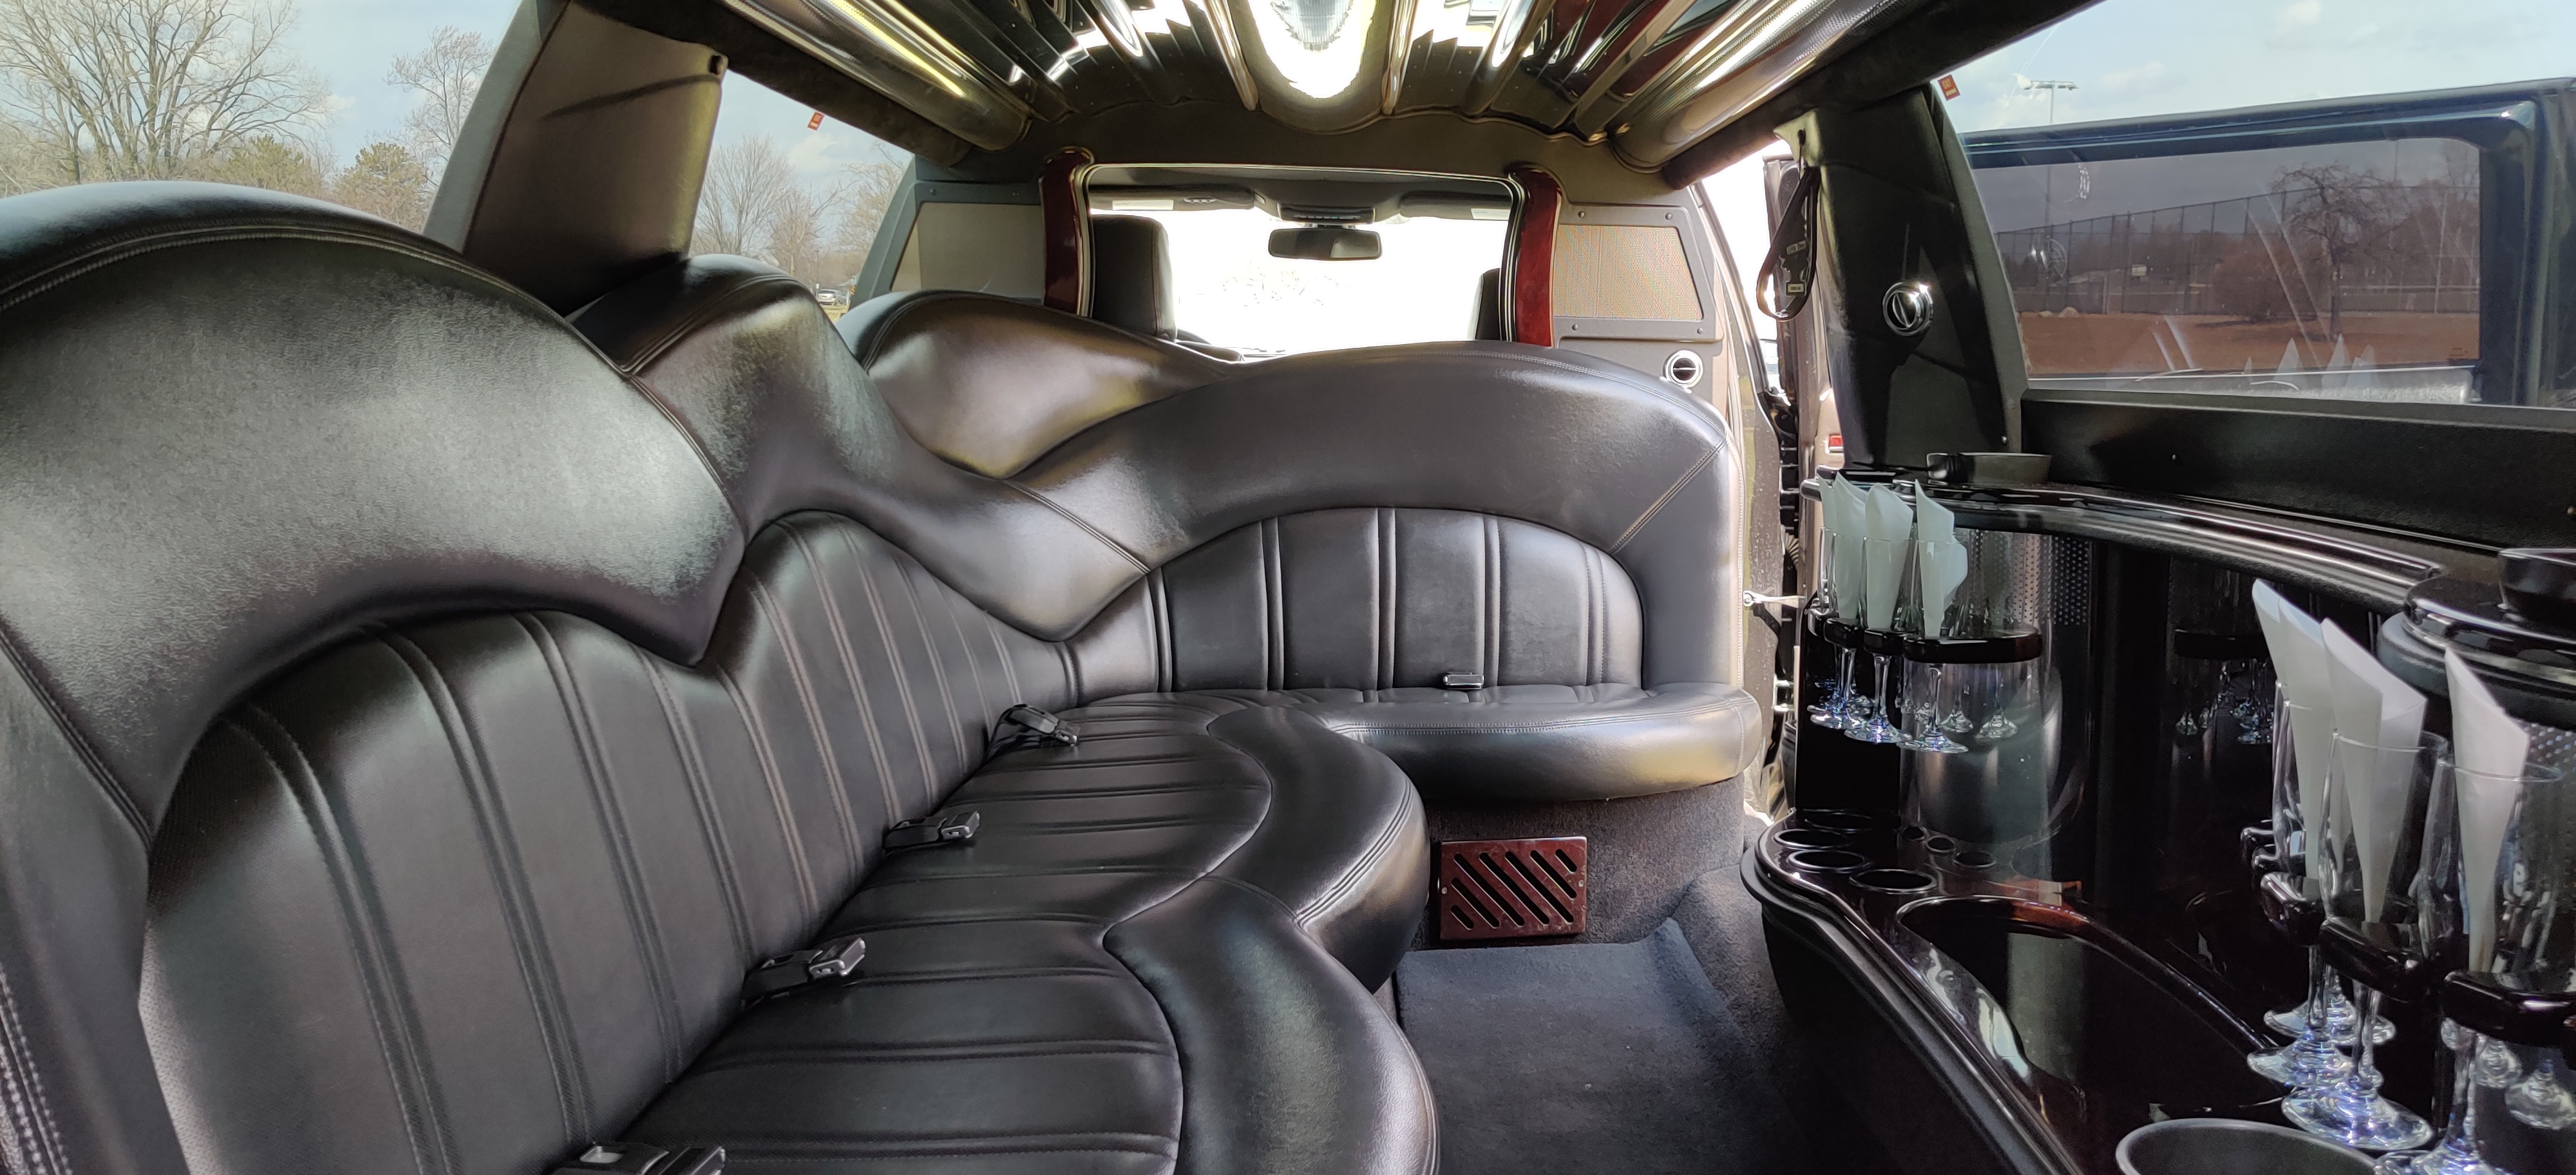 9 Passenger Lincoln MKT Interior